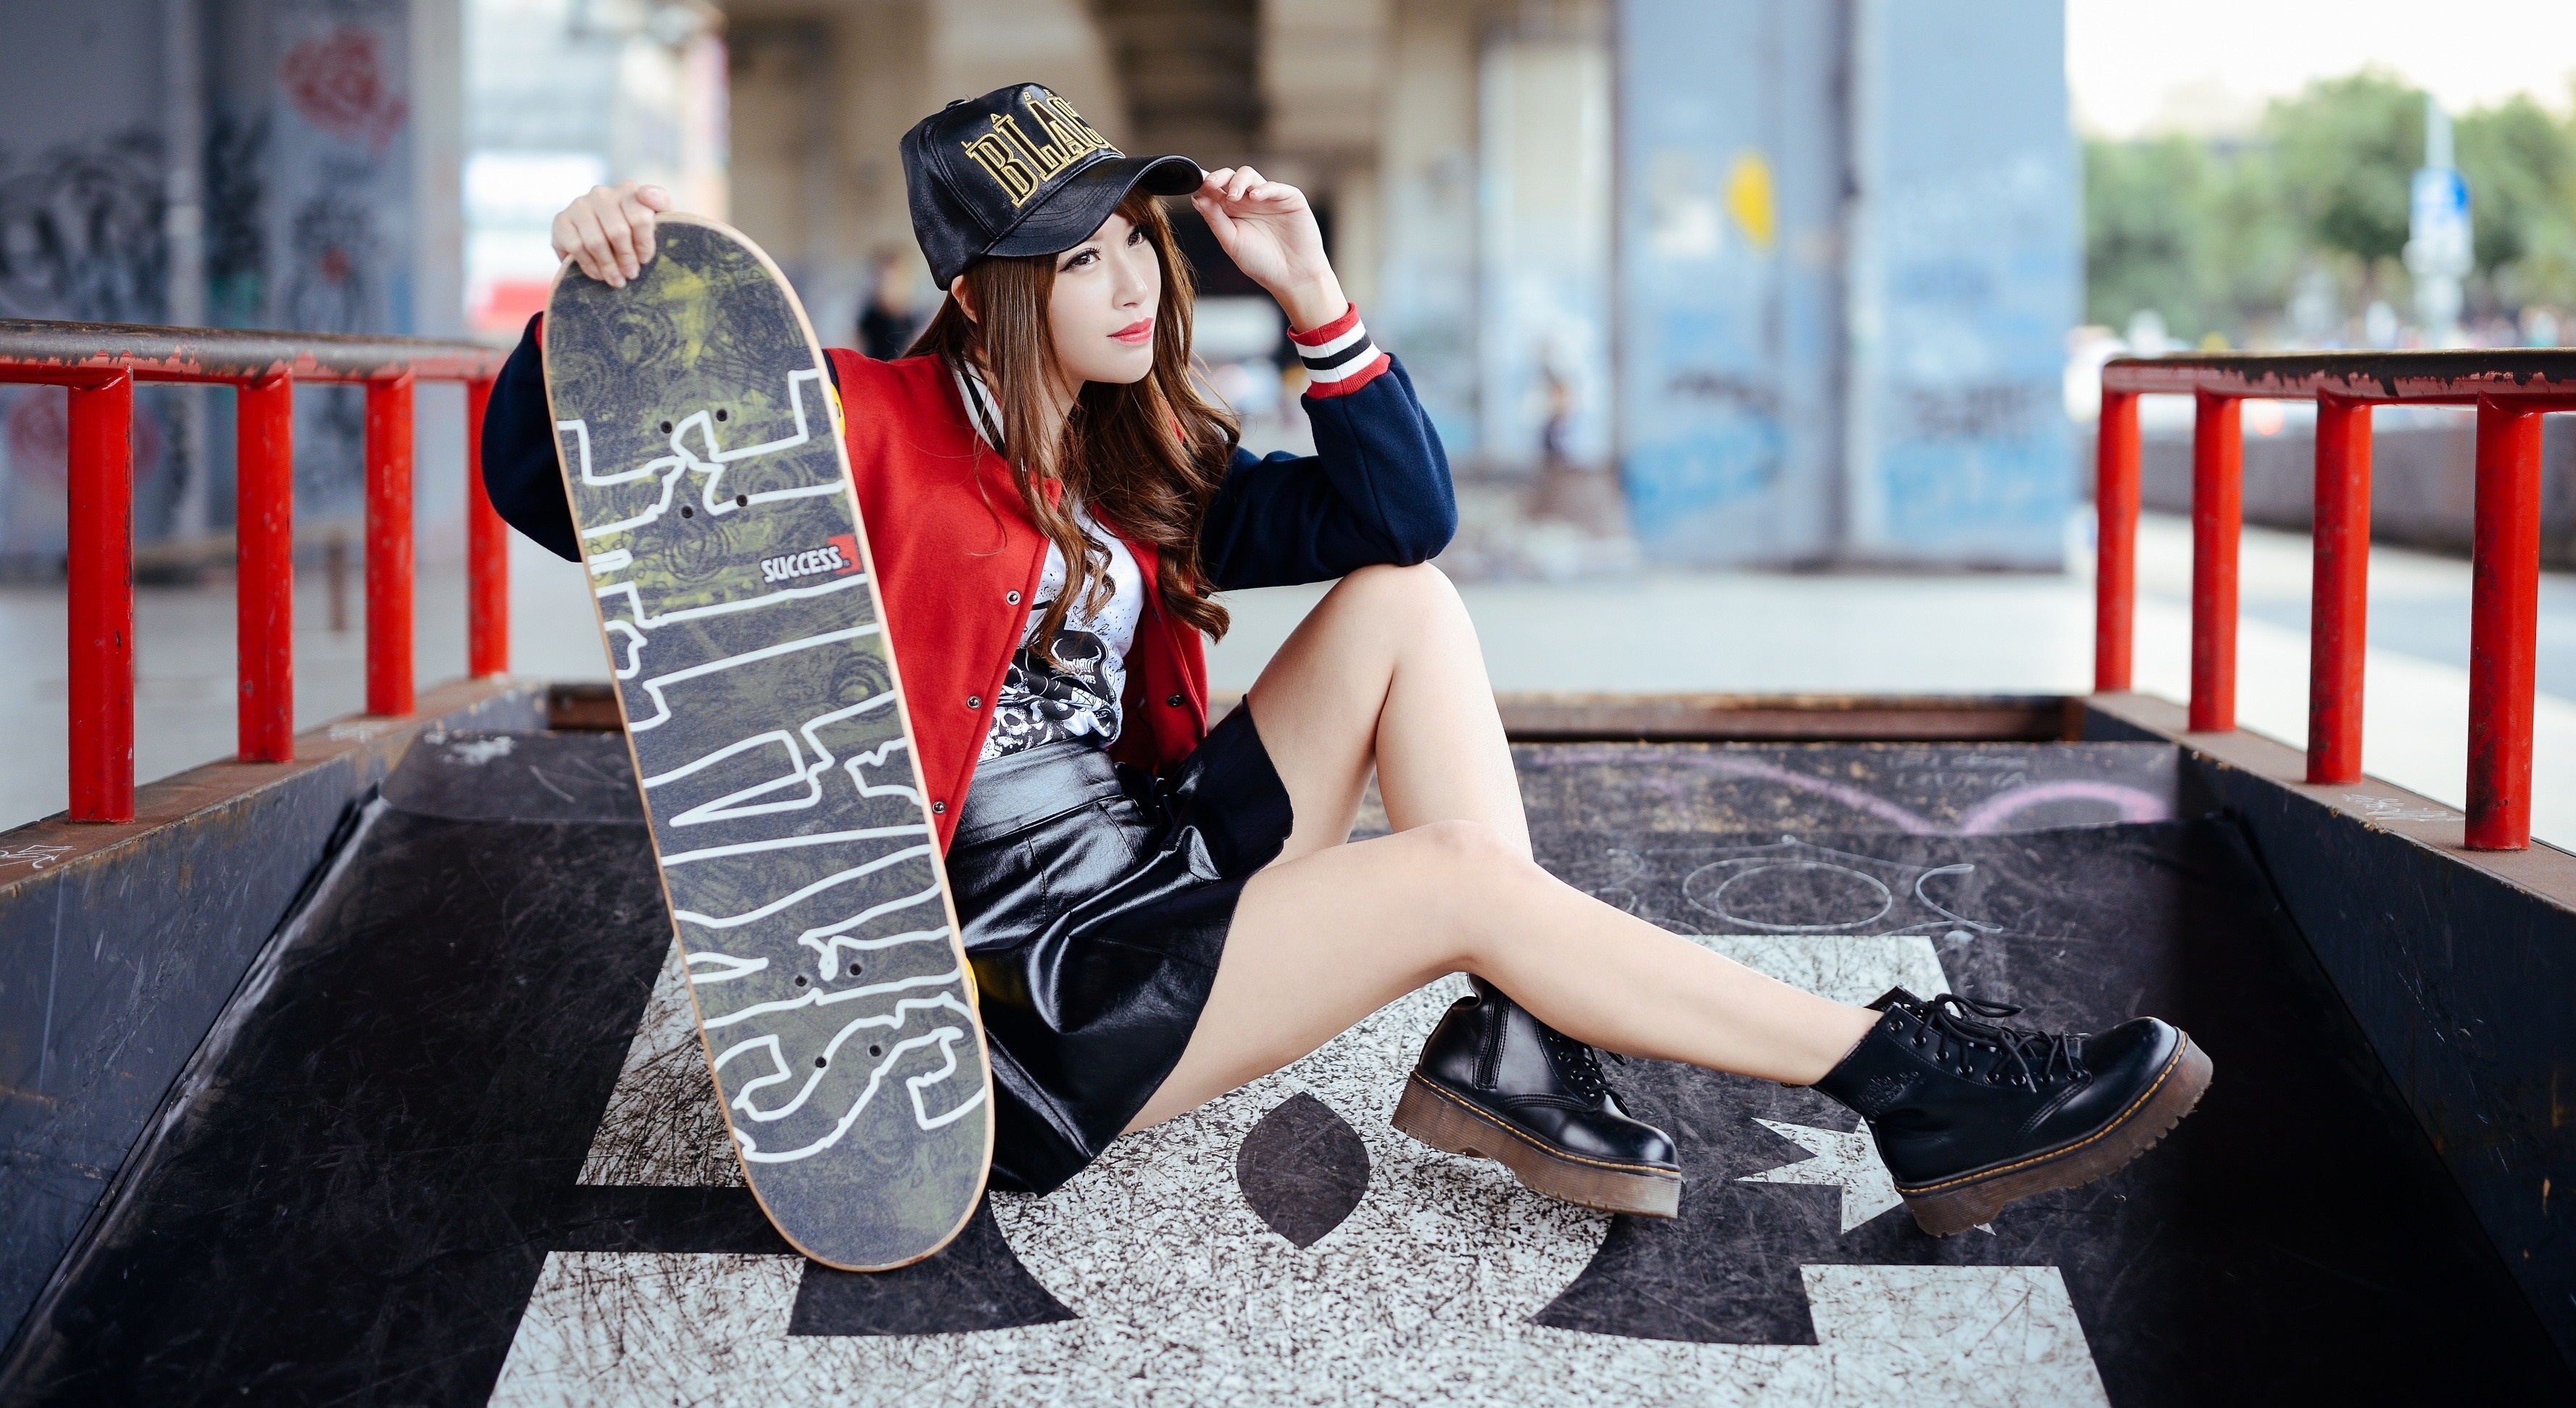 Asian Model Women Long Hair Dark Hair Sitting Skateboard Black Skirts Ankle Boots Jacket Baseball Ca 3554x1942